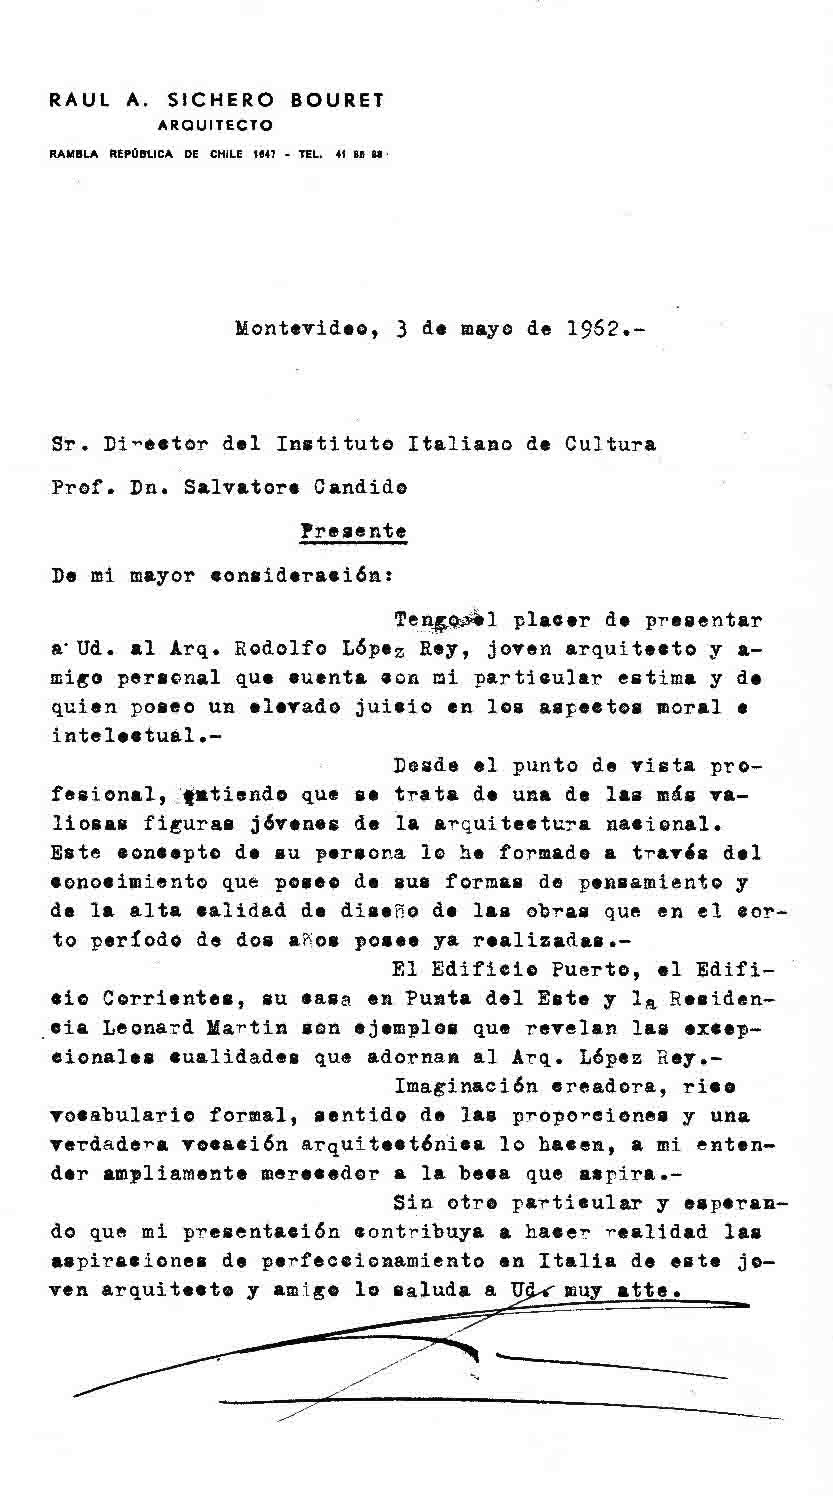 Letter from Arq. Raúl Sichero